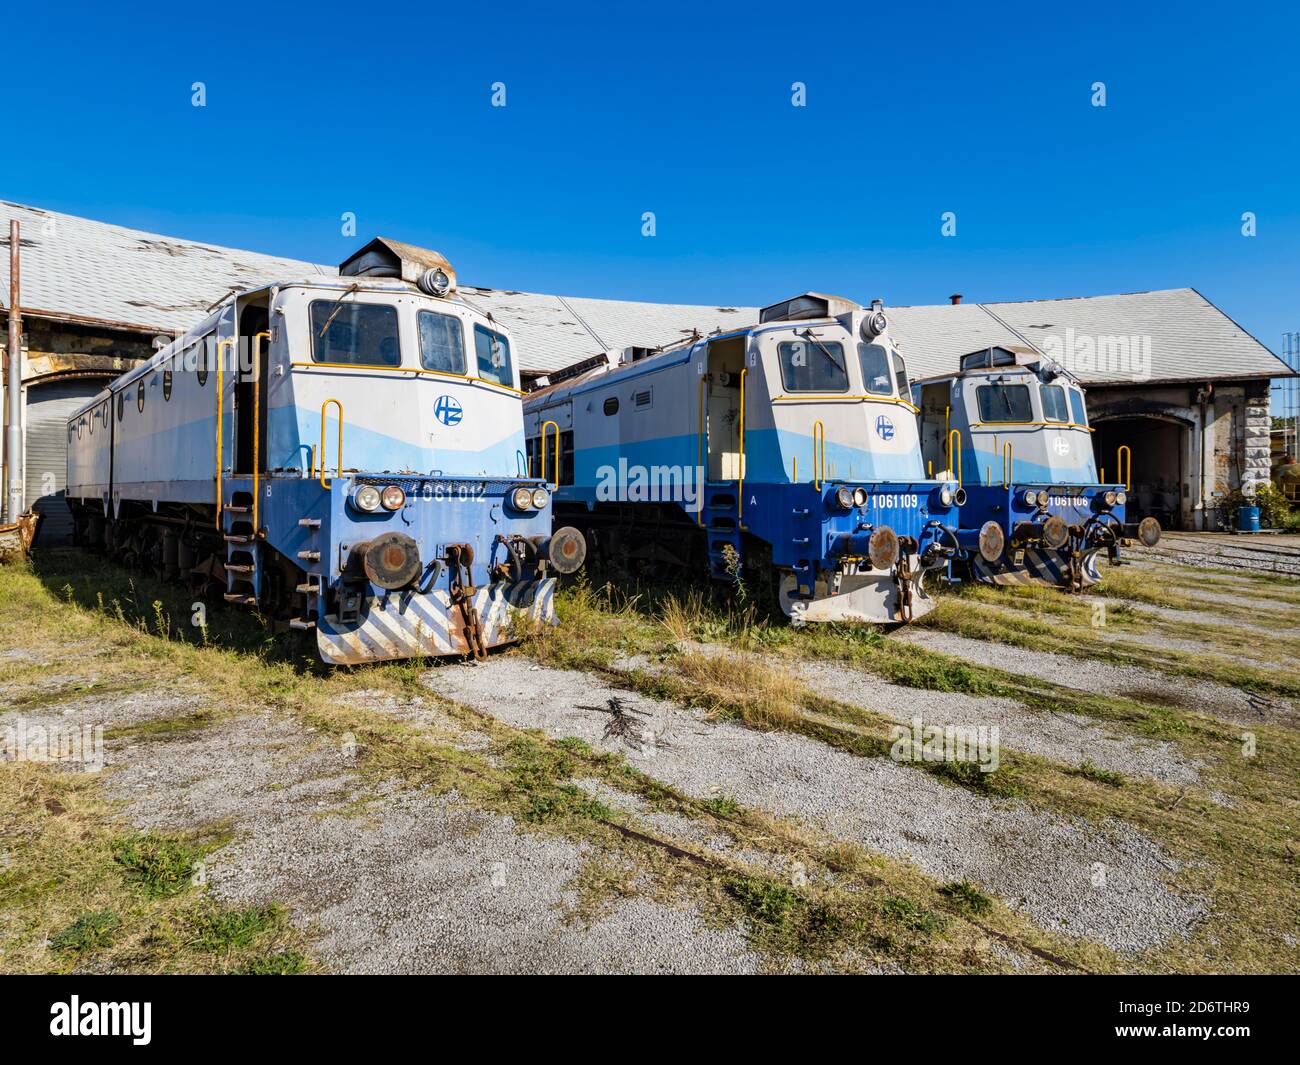 Locomotives HZ series 1061 012, 109 and 106 (ex series 362) built by Ansaldo-Breda now standing derelict in Rijeka in Croatia Europe Stock Photo